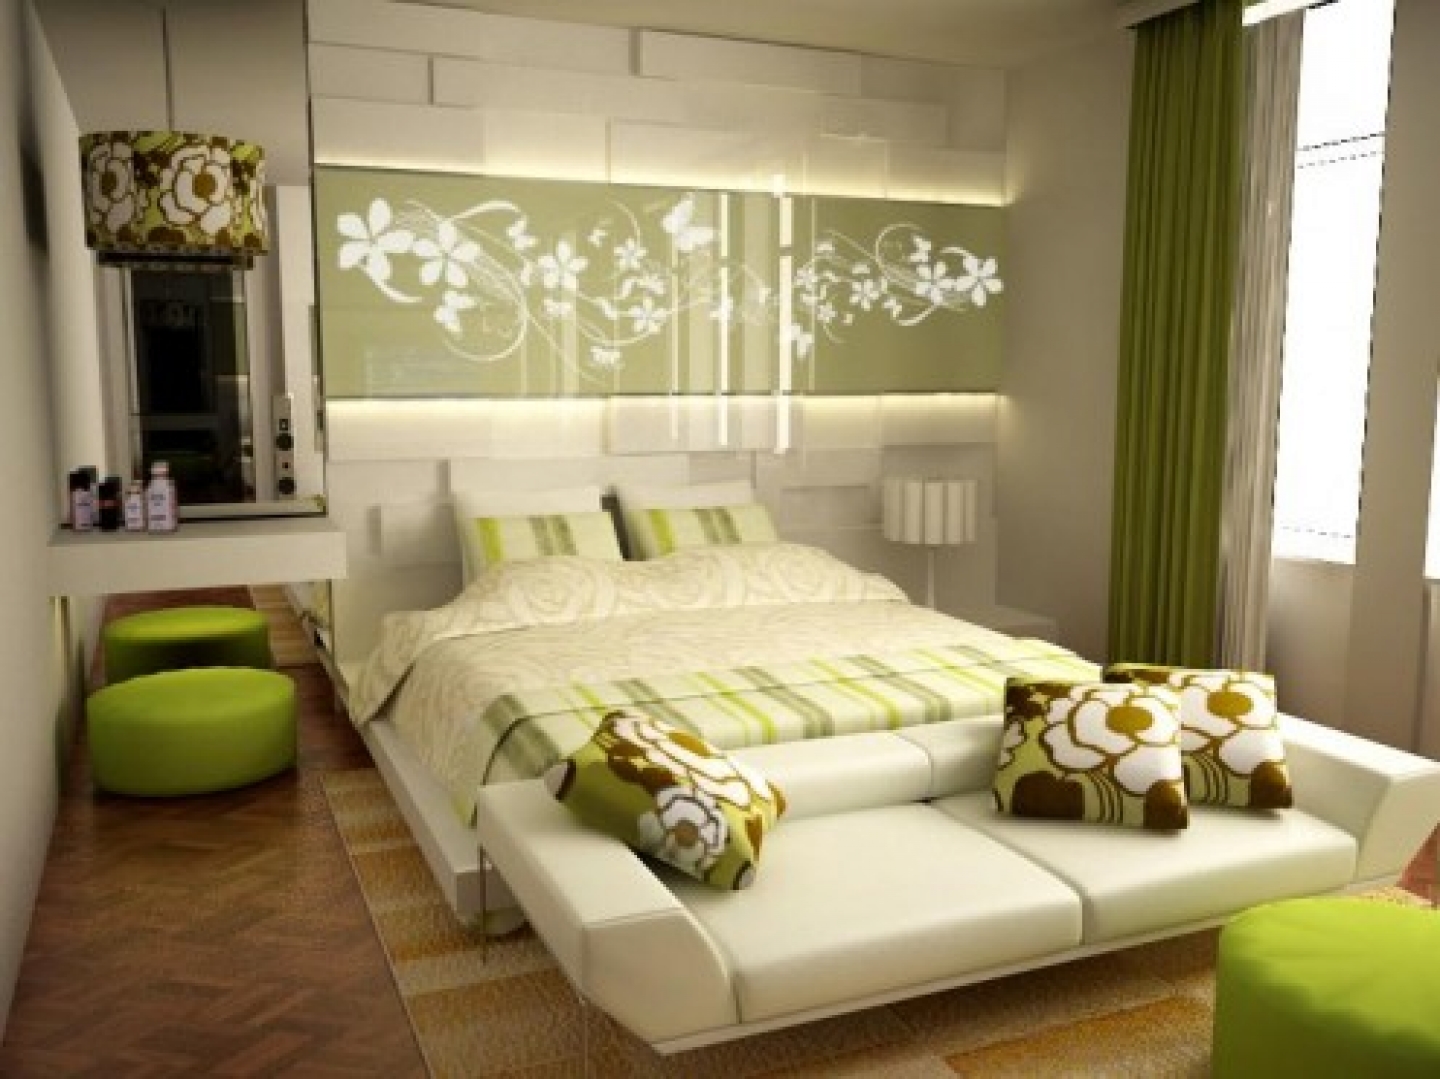 Wallpaper Bedroom Decor Home Decorations Houses